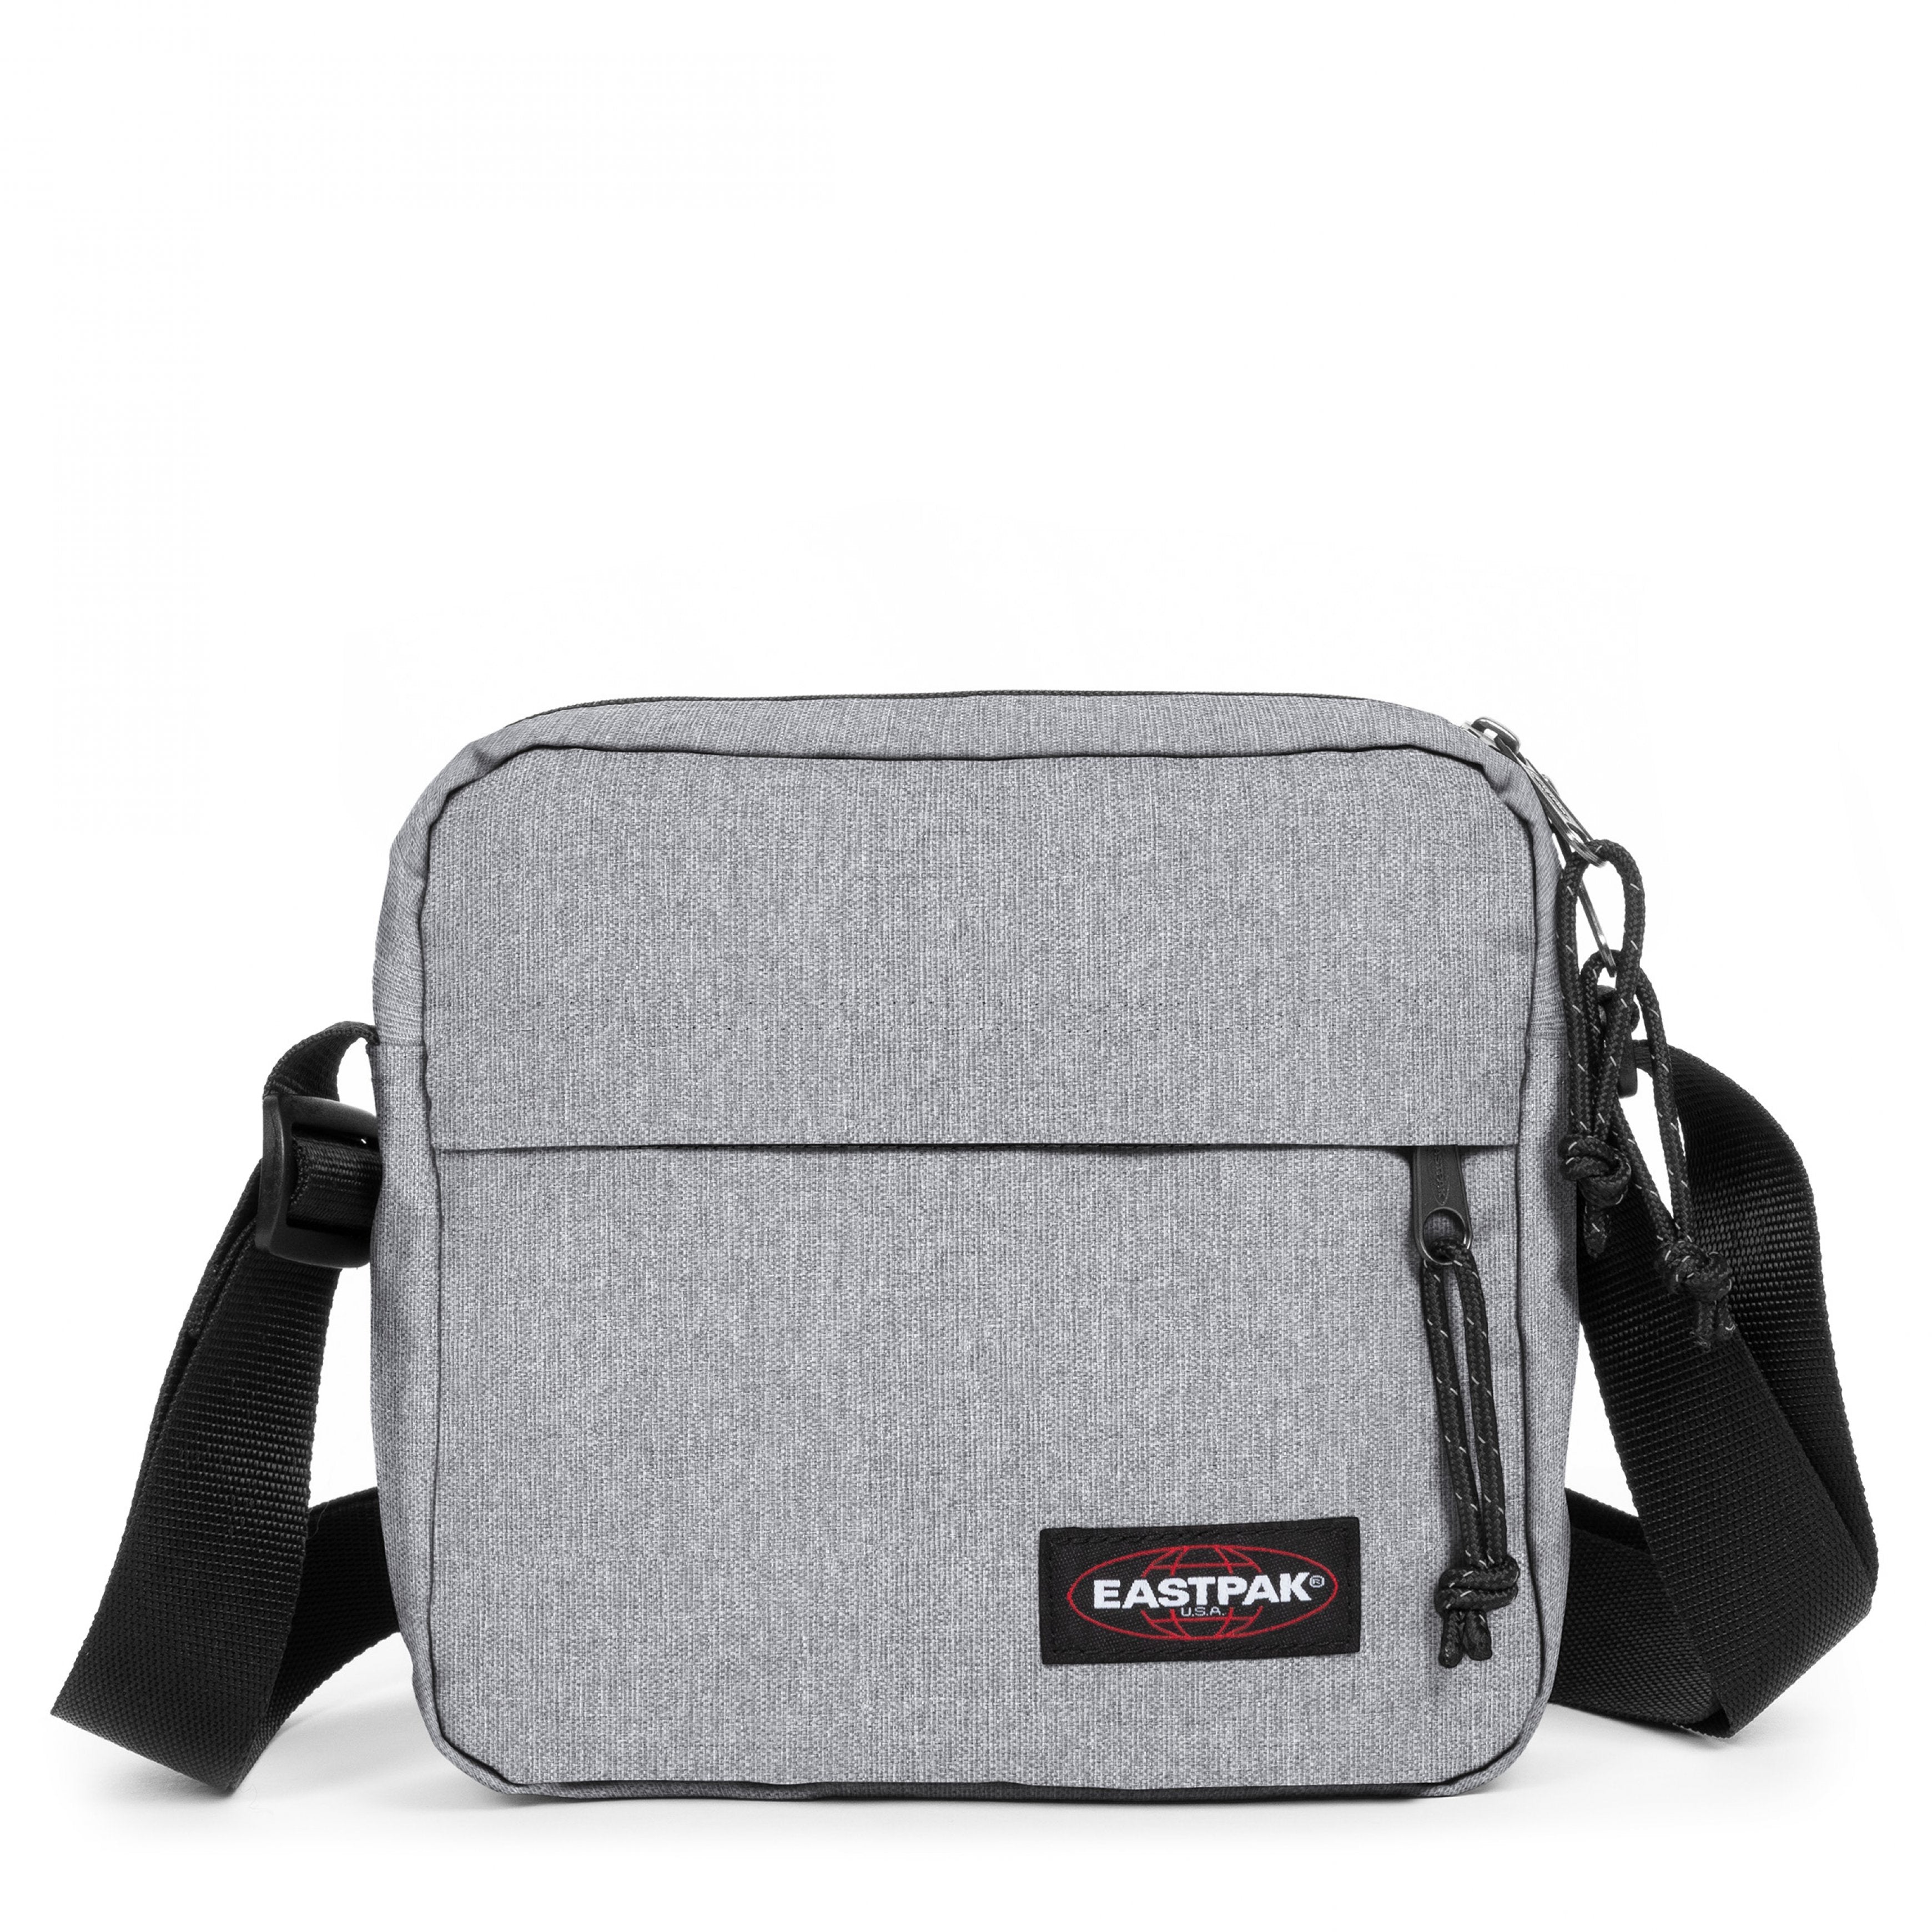 Eastpak-The Bigger One-Large Crossbody bag-Sunday Grey-EK0A5BIB3631